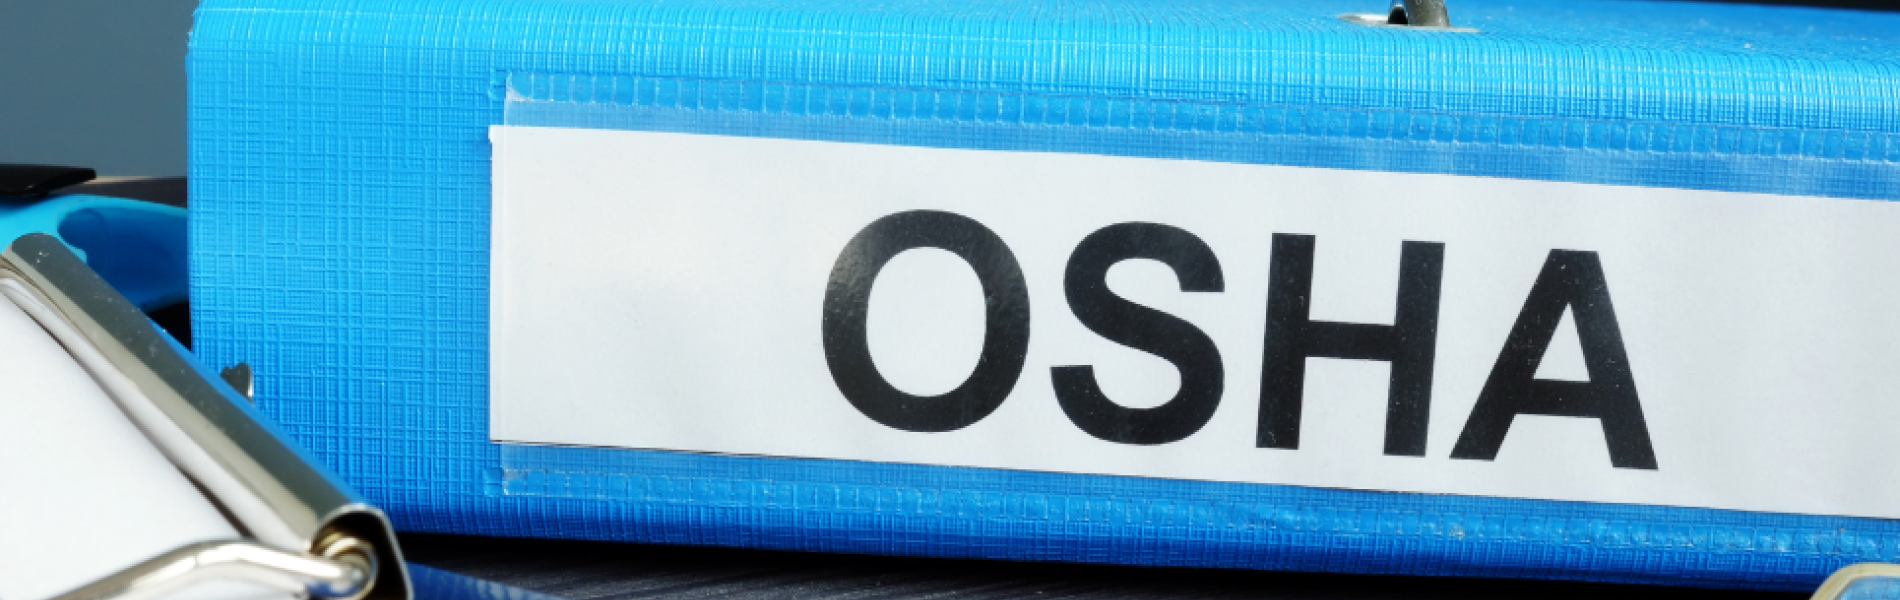 blue binder with OSHA label